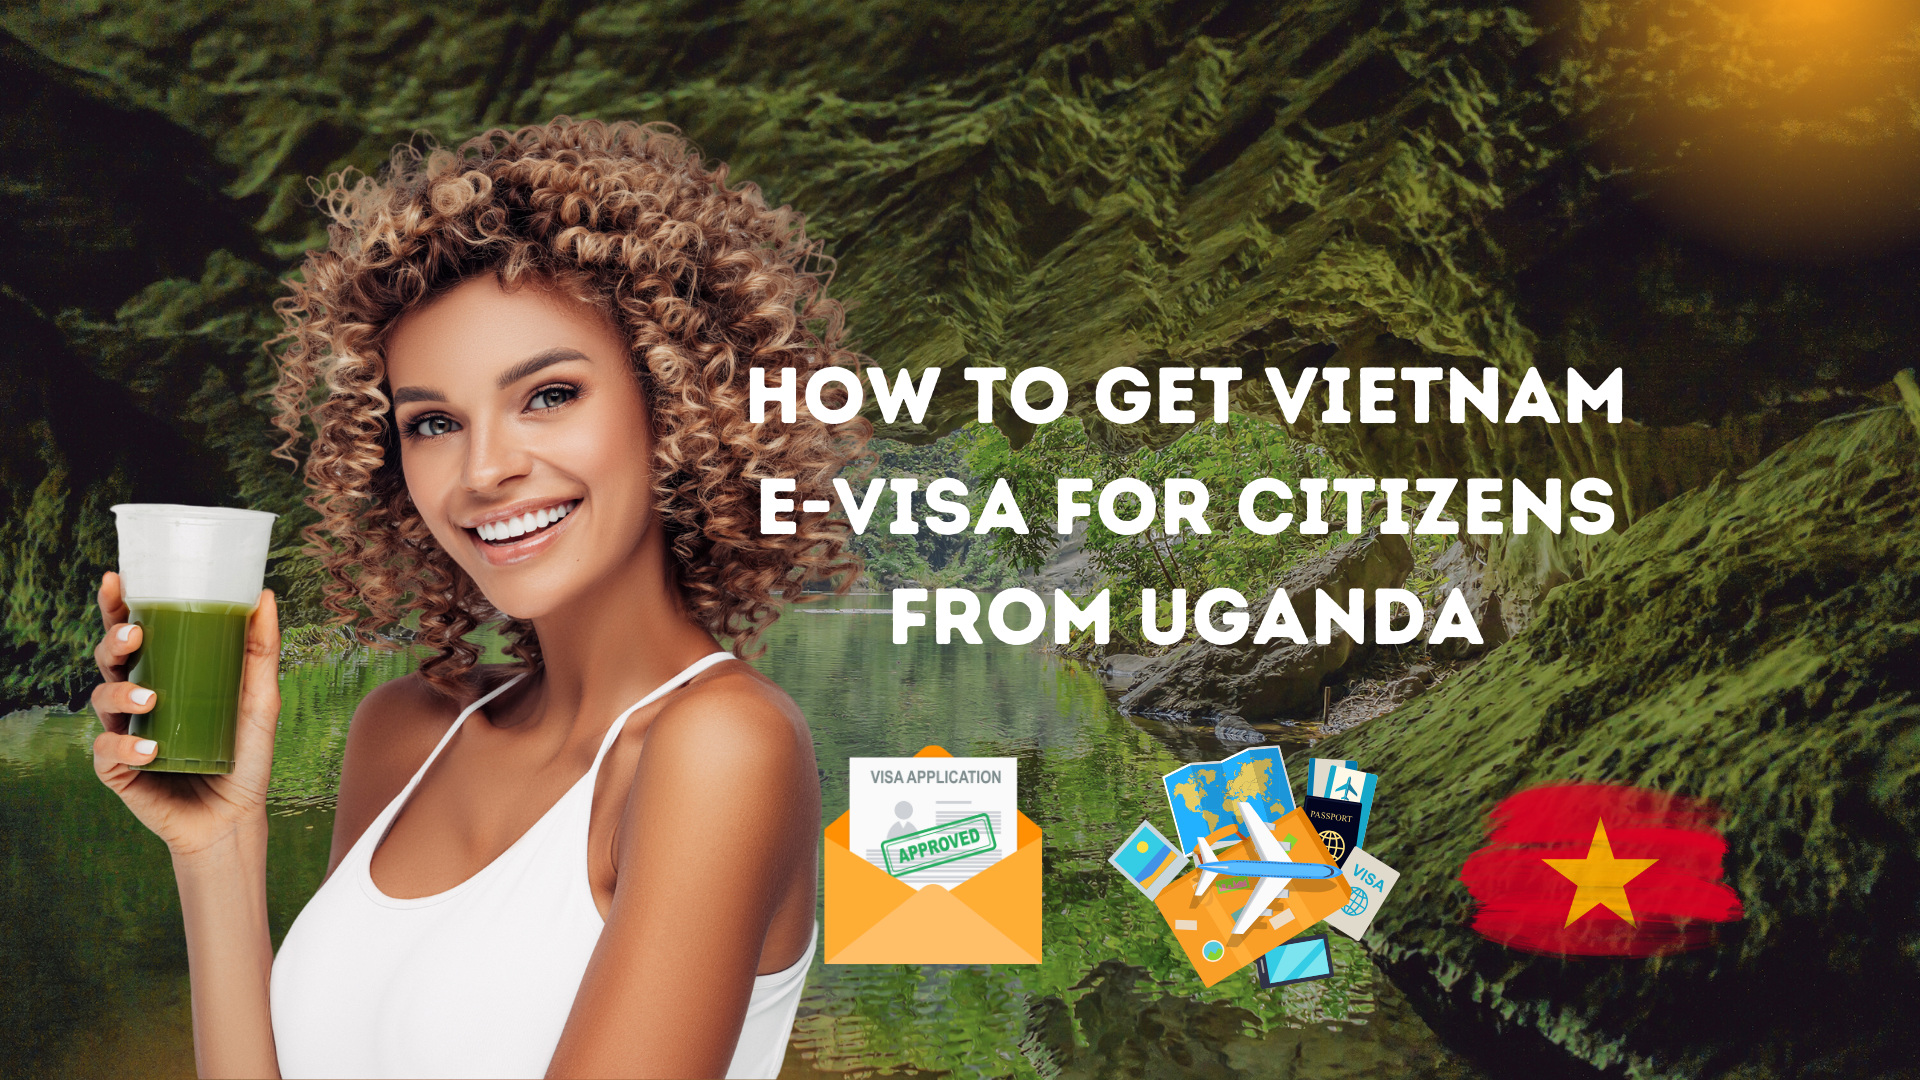 Vietnam Evisa for Citizens from Uganda